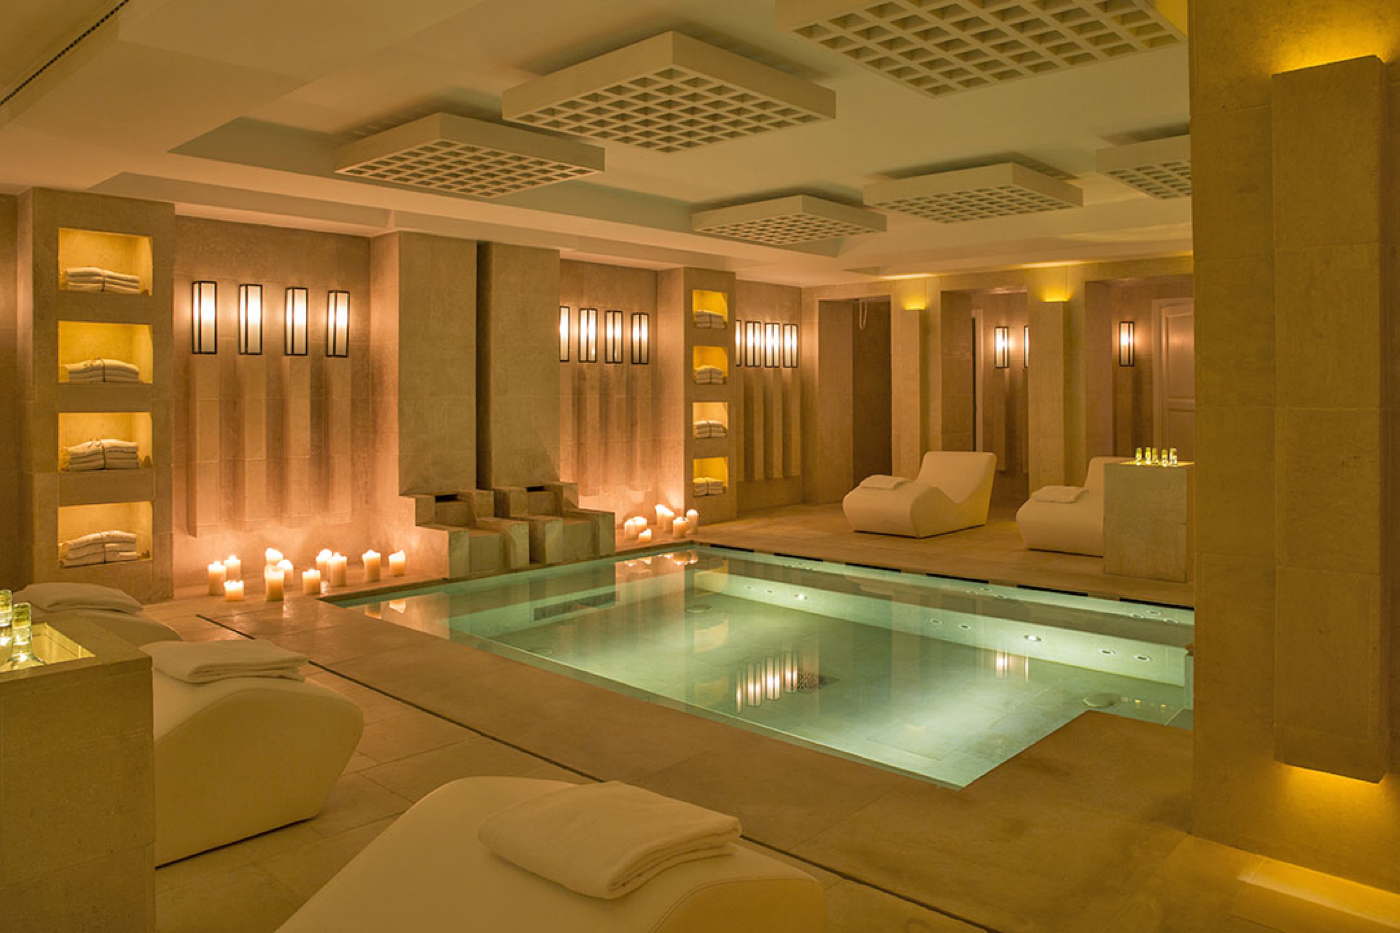 Luxury villa with pool in 5 star golf resort in Puglia Italy